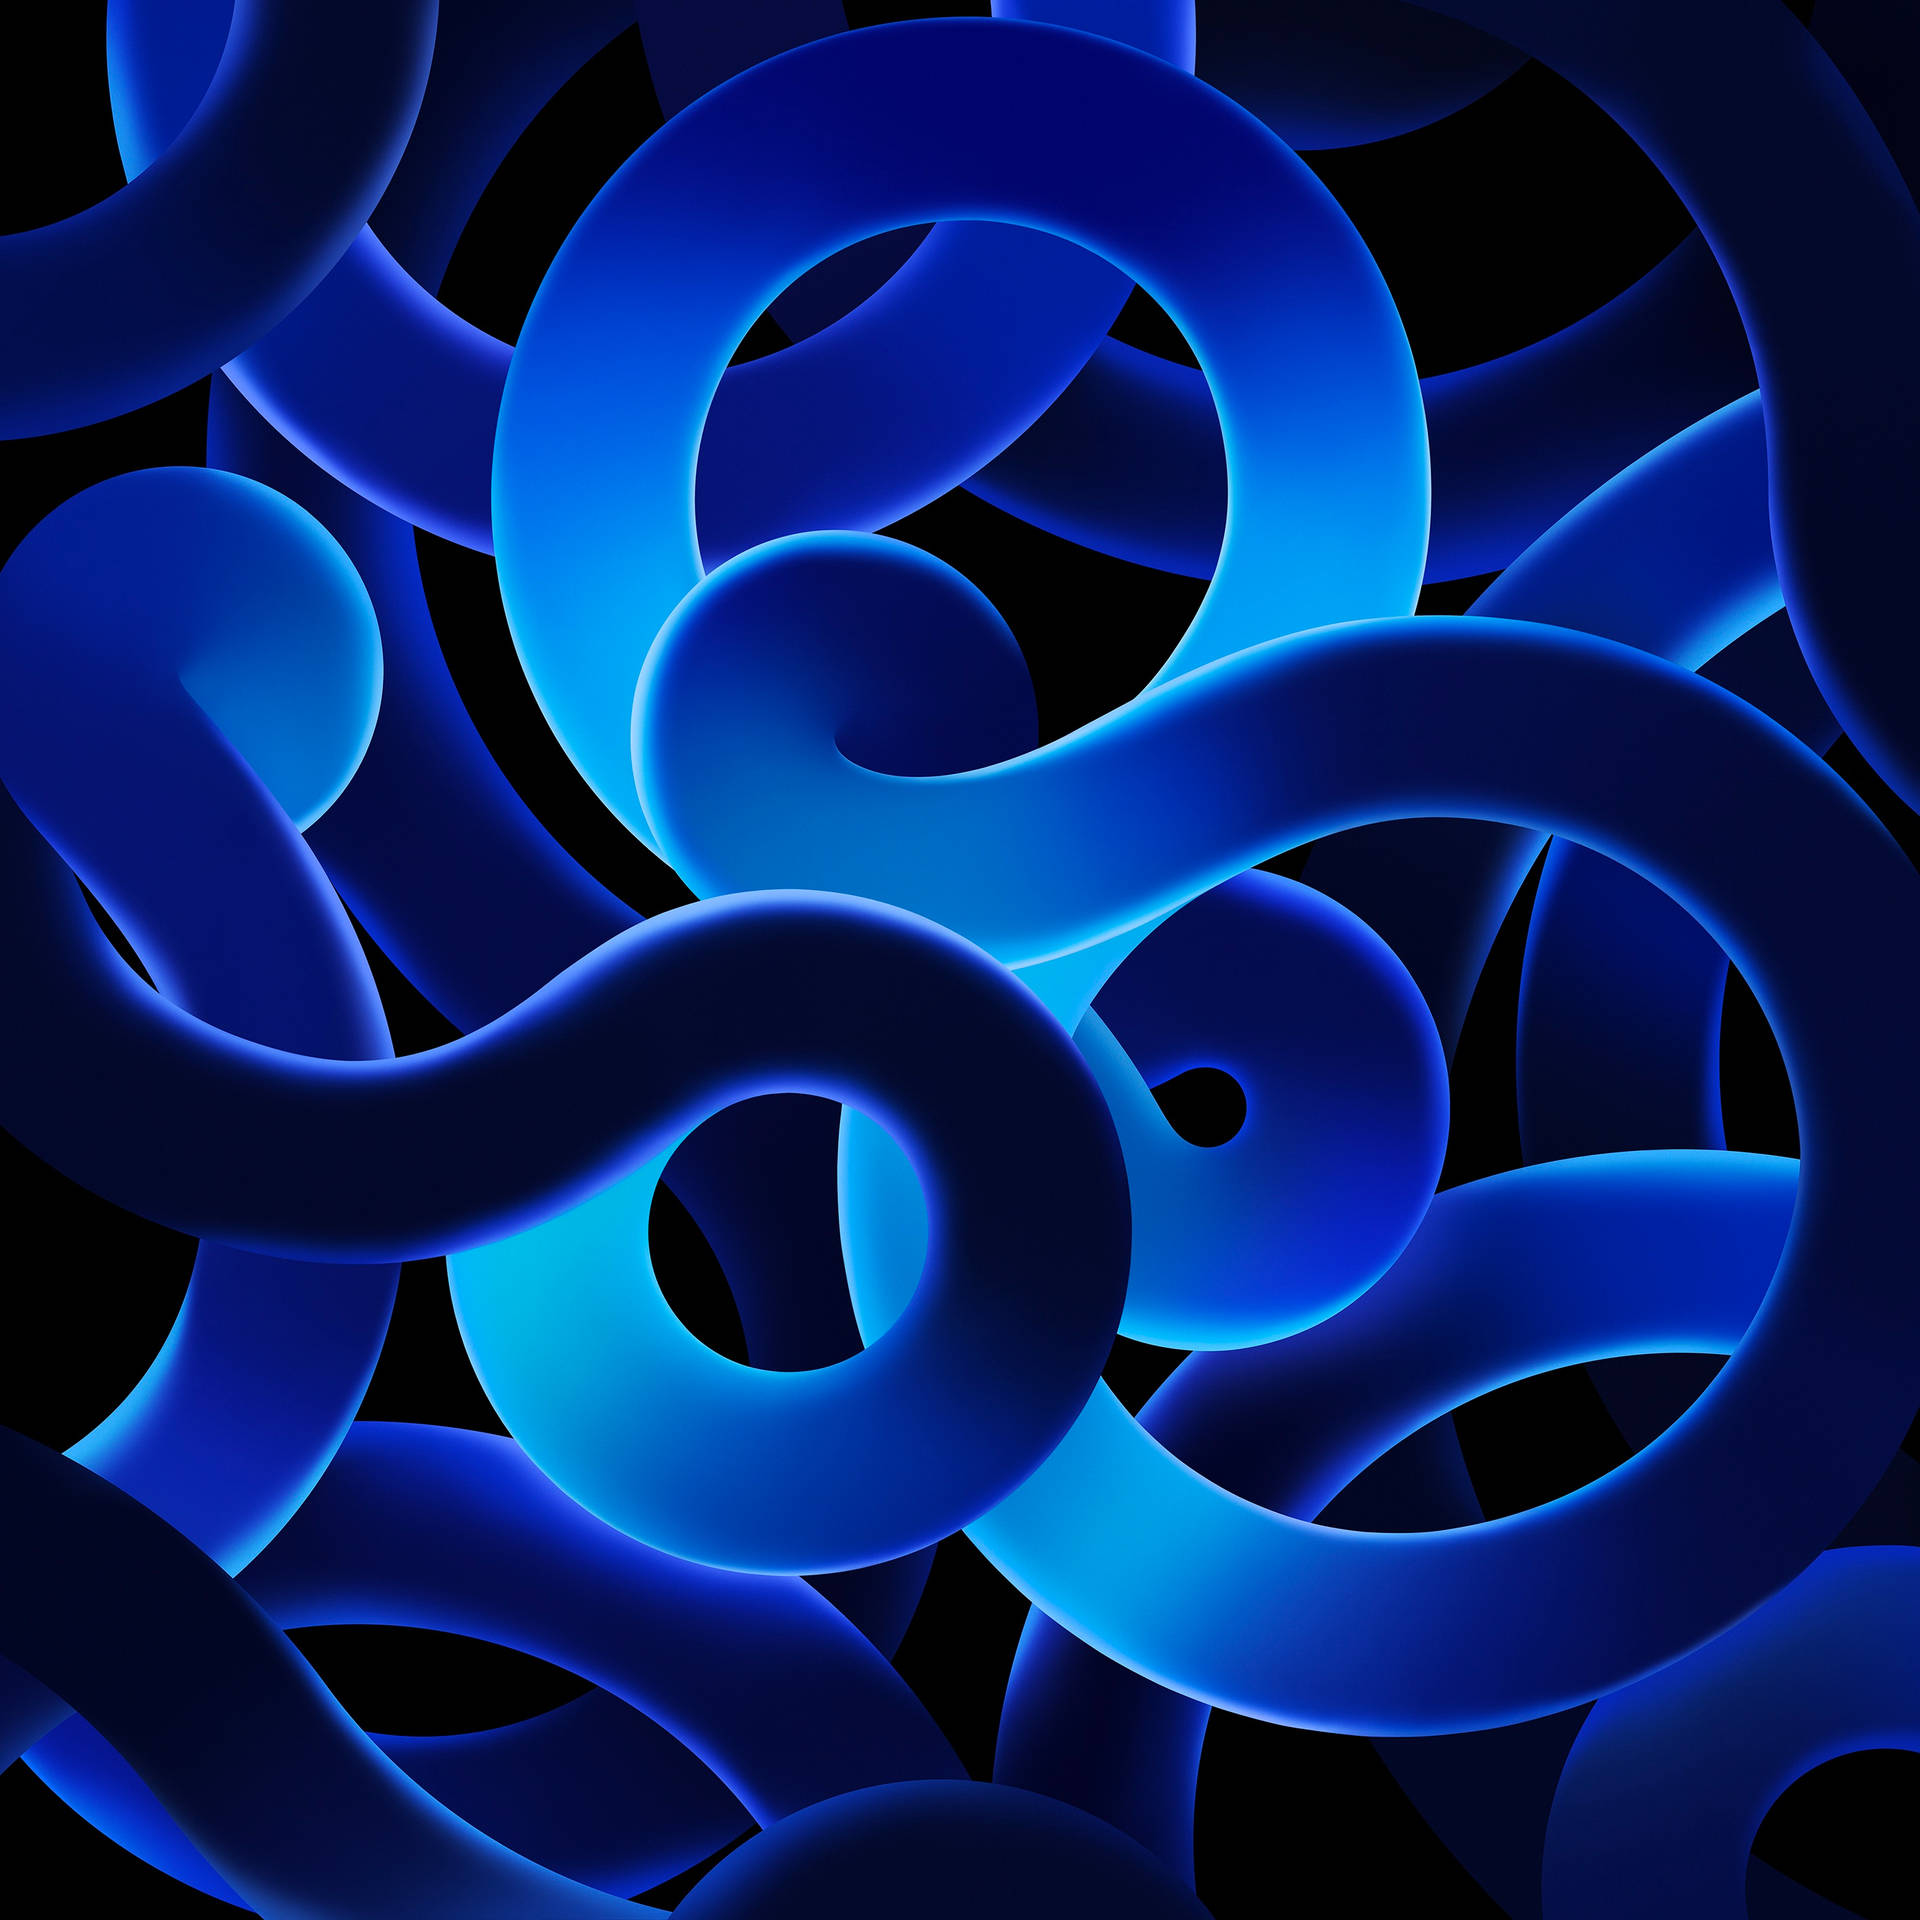 Deep Blue Swirls Ipad Air 4 Background